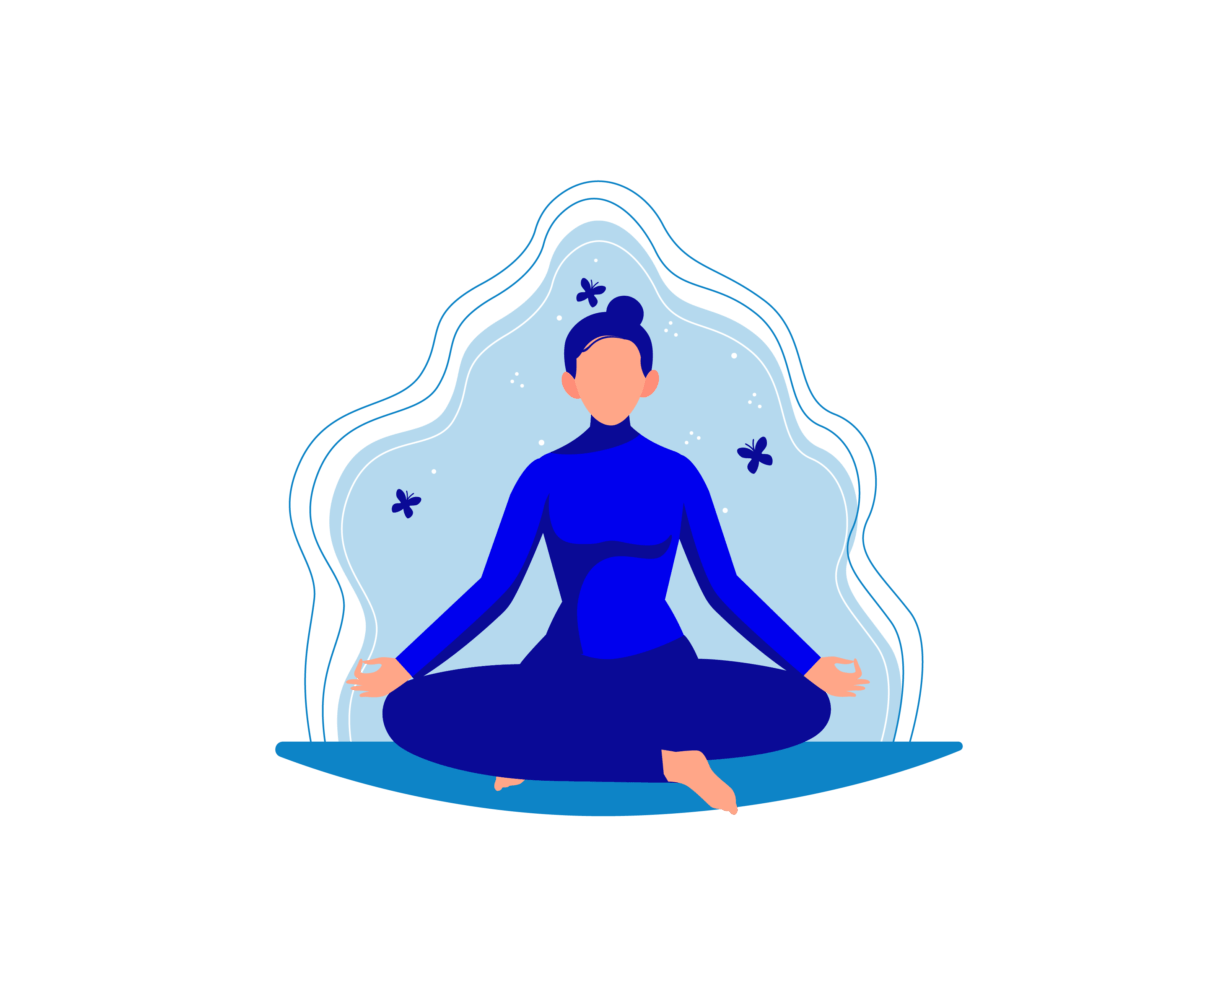 Illustration of person meditating wearing blue